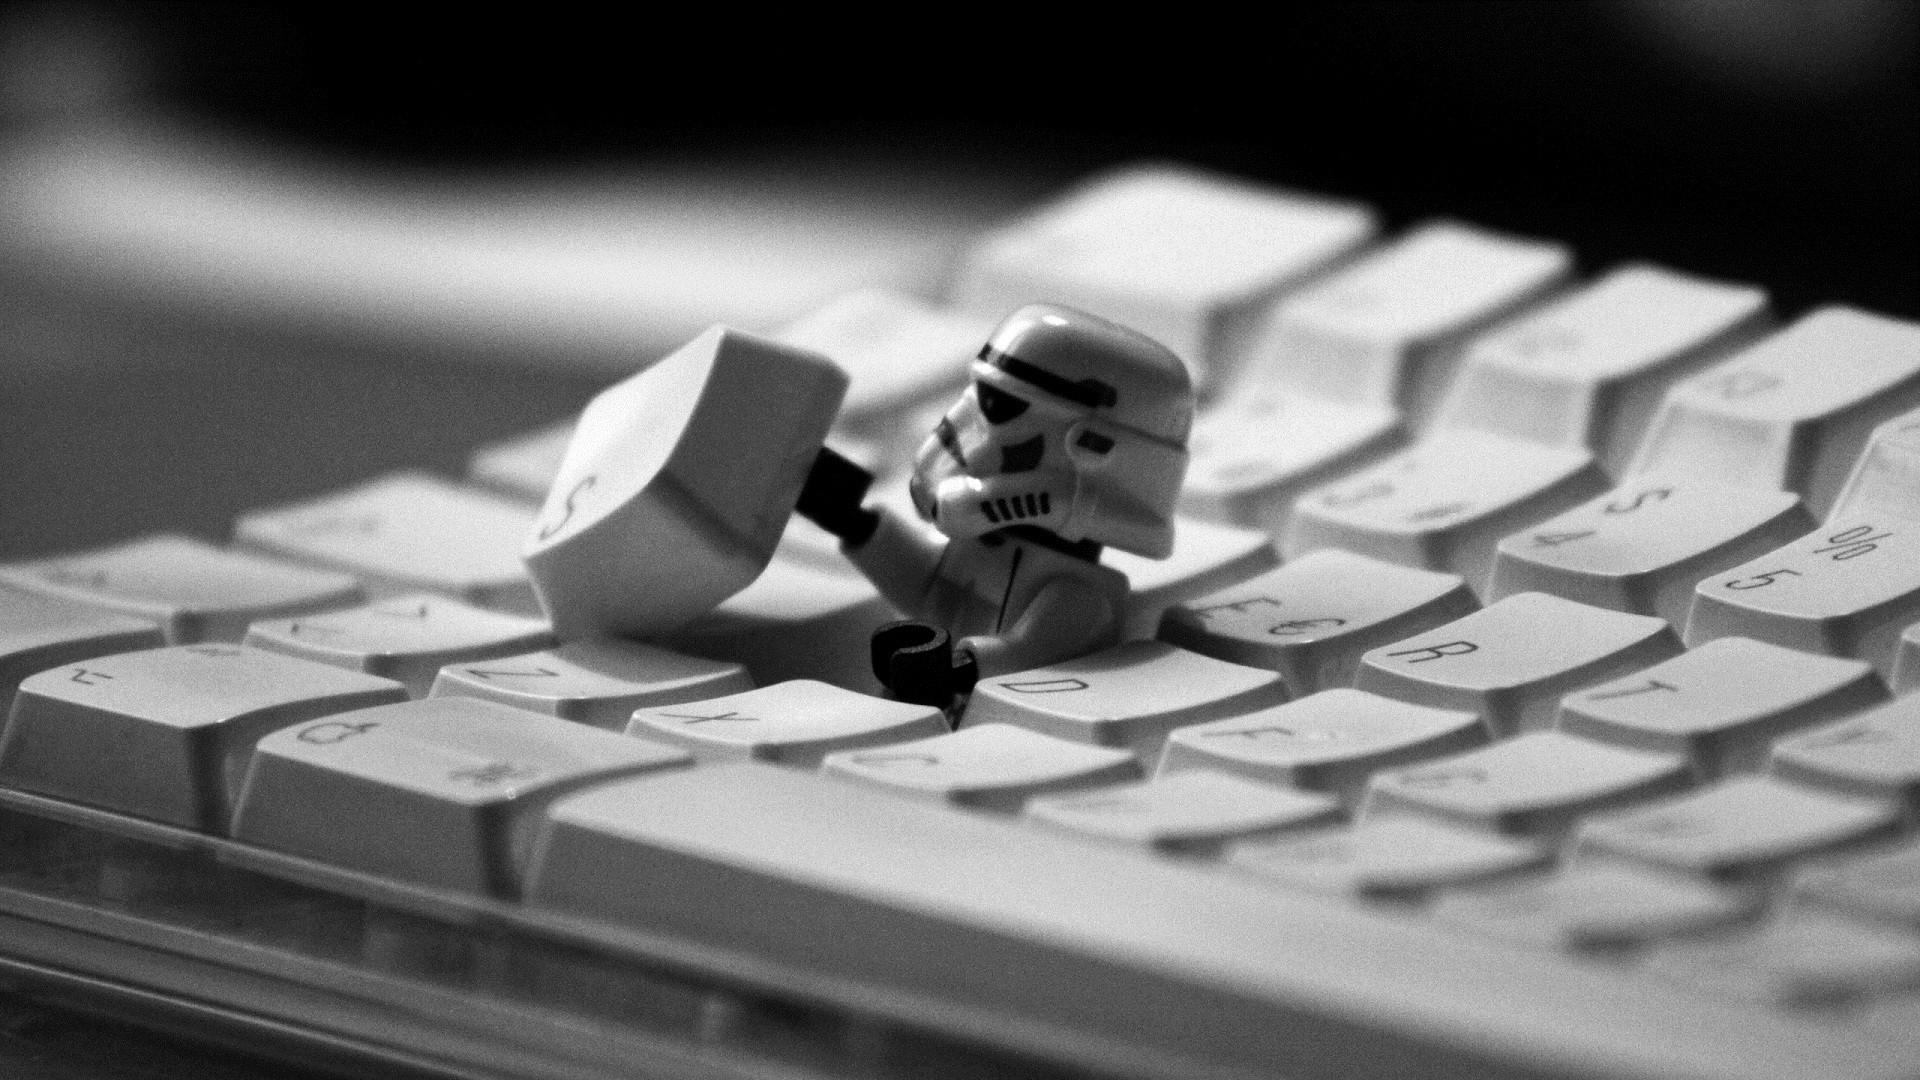 LEGO Star Wars Stormtrooper Humor White Keyboards LEGO Star Wars LEGO Stormtrooper Toys Monochrome L 1920x1080